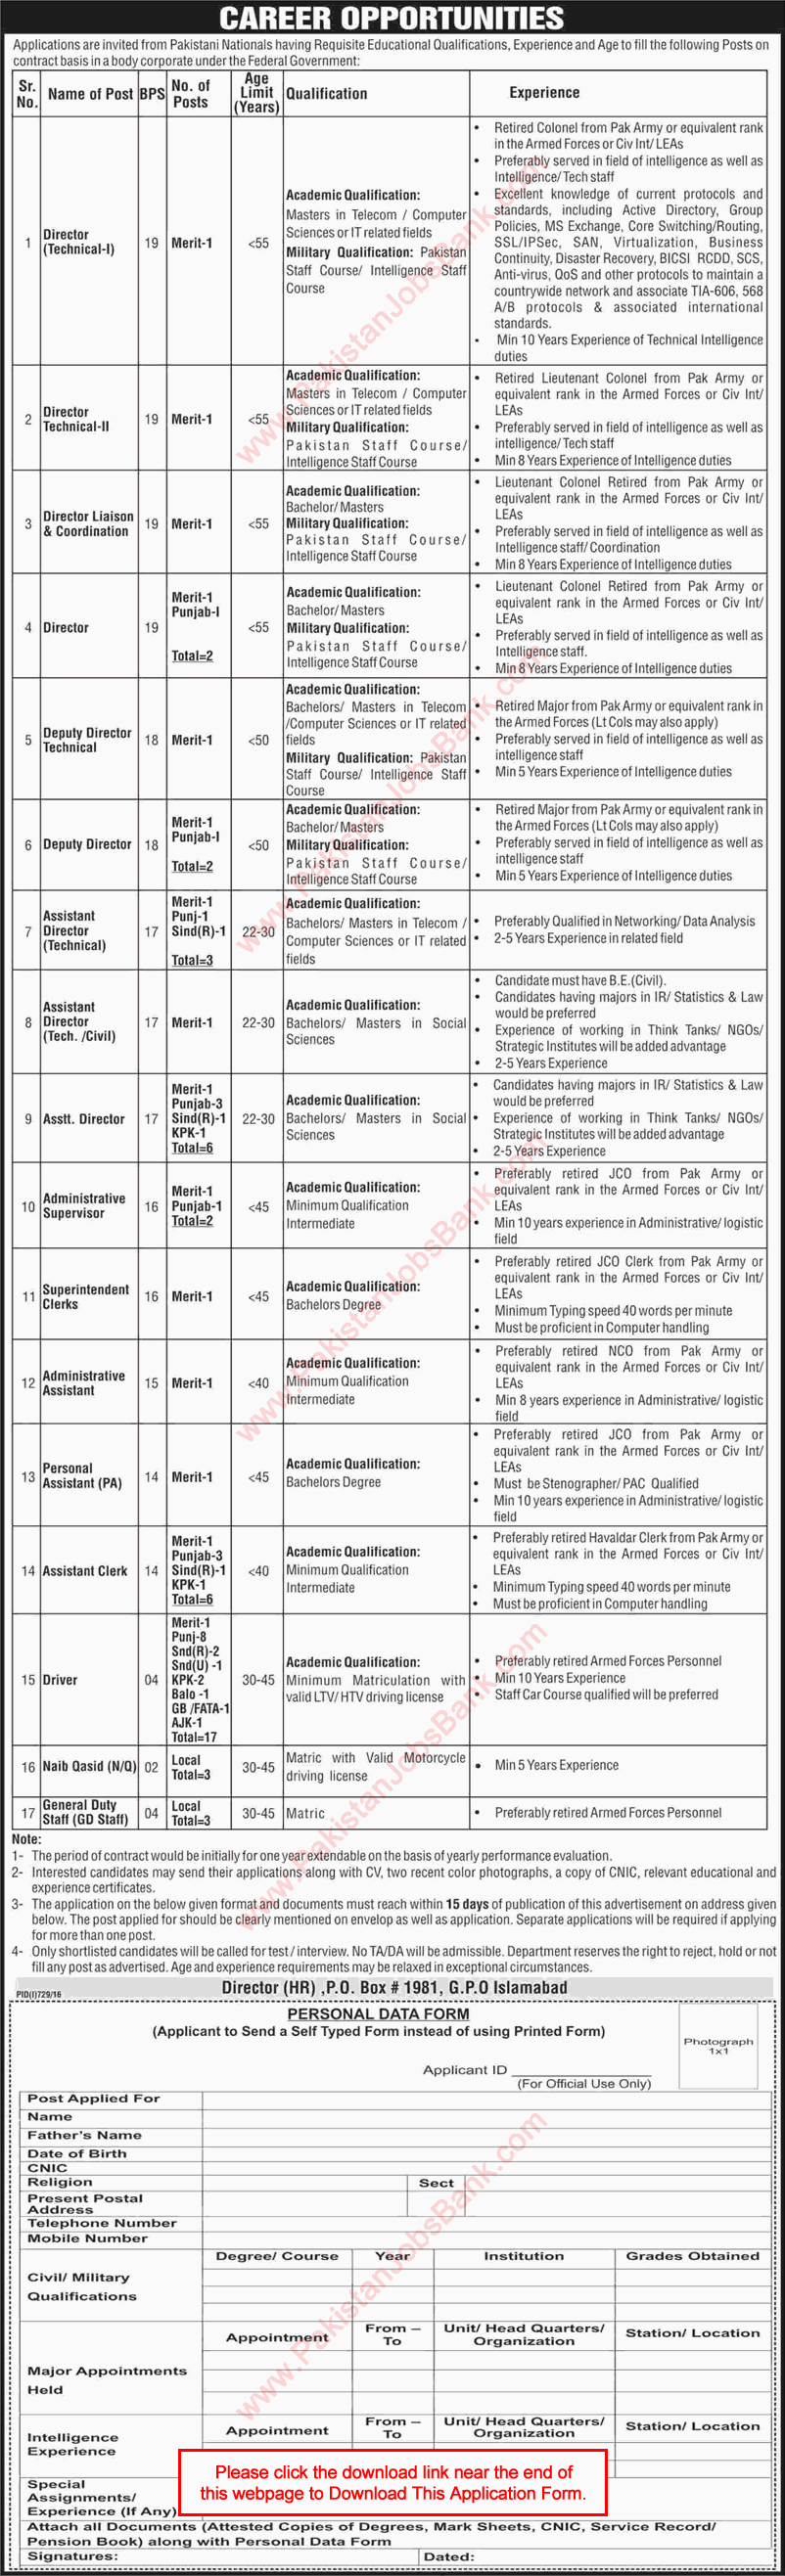 PO Box 1981 GPO Islamabad Jobs 2016 August Application Form NACTA Latest